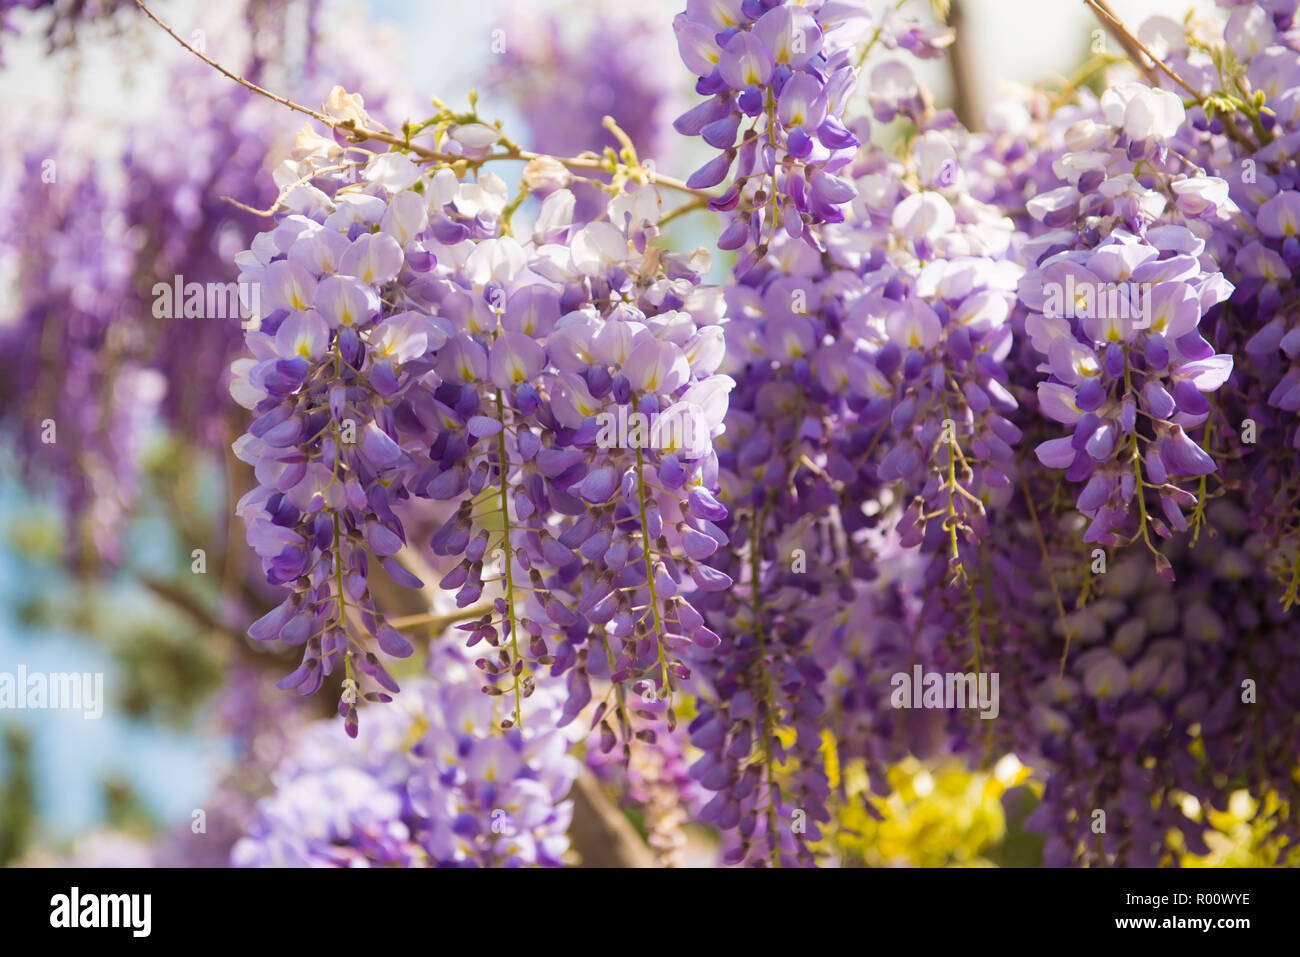 Beautiful purple wisteria flowers blooming in spring garden Stock Photo